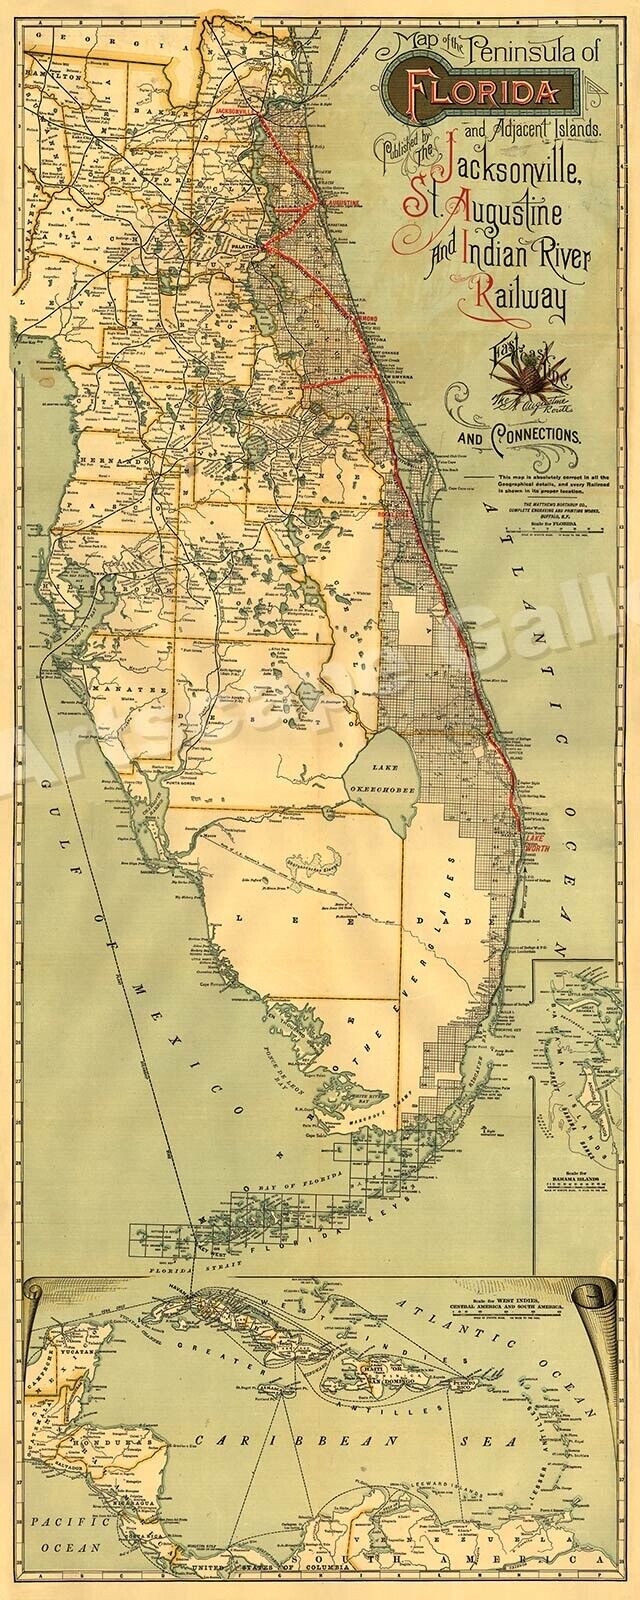 1893 Railroad Map of Florida Historic East Coast Line Railway Map - 24x60